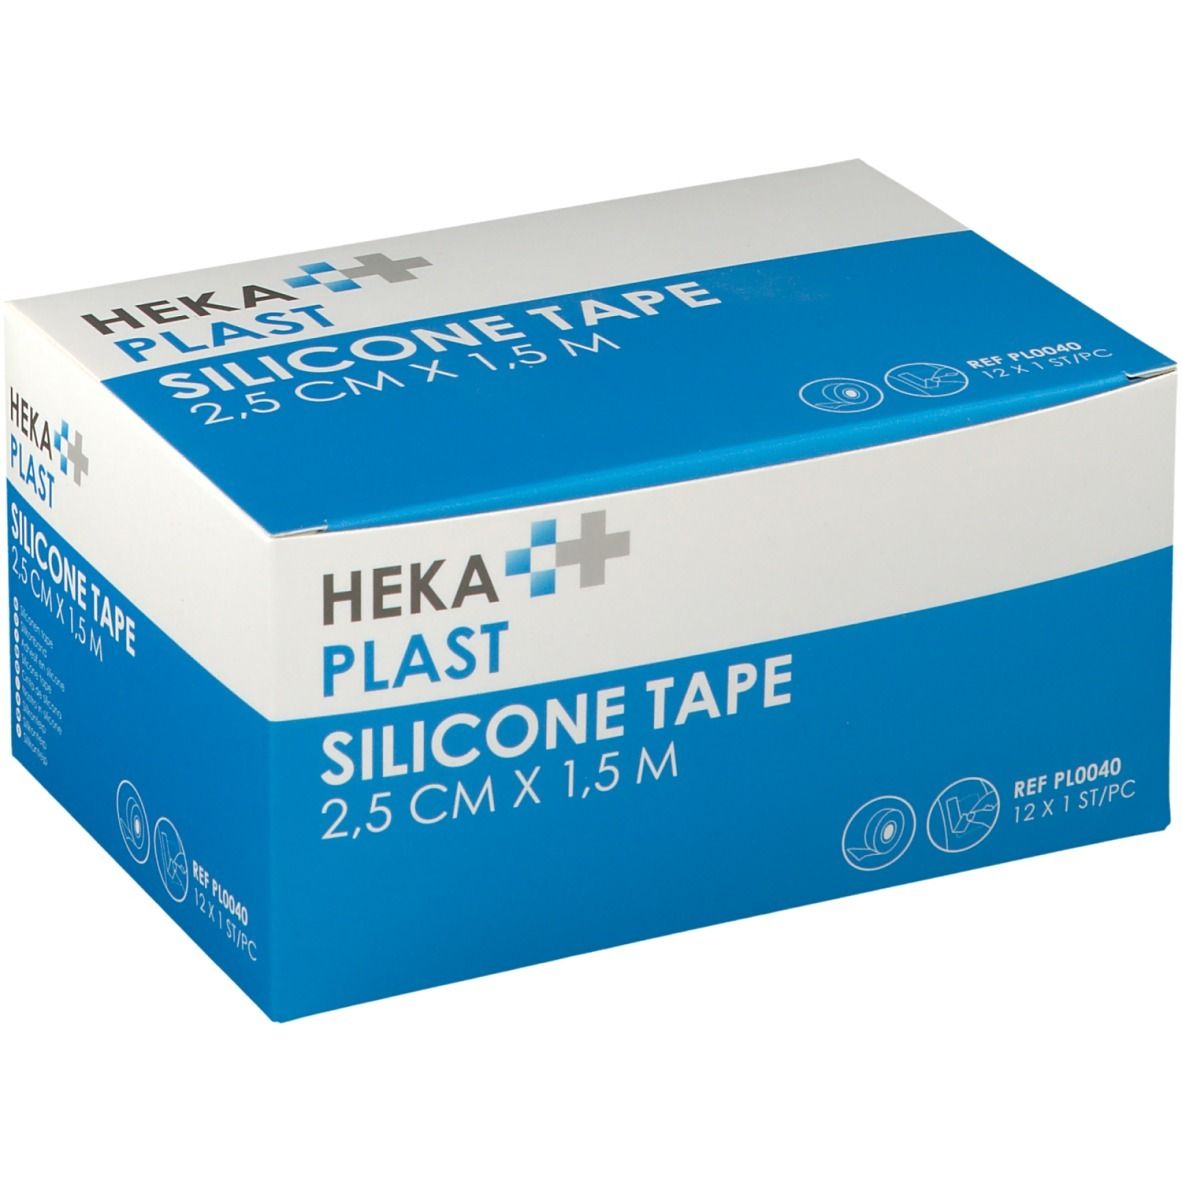 Heka Plast Tape Silicone 1,5 m x 2,5 cm